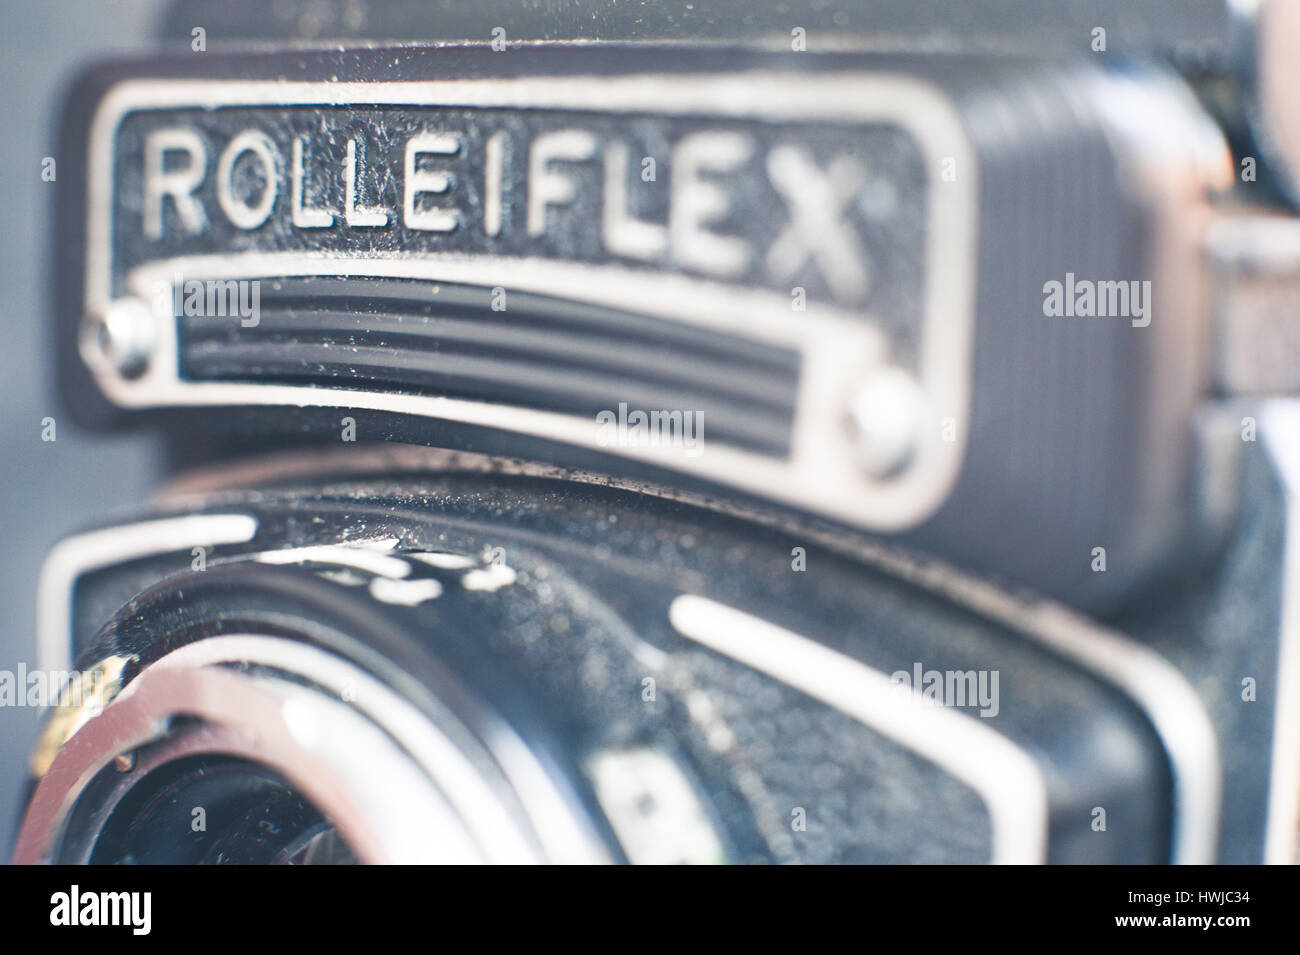 Vintage bioptical Rolleiflex photo camera detail, logo name and body camera part Stock Photo